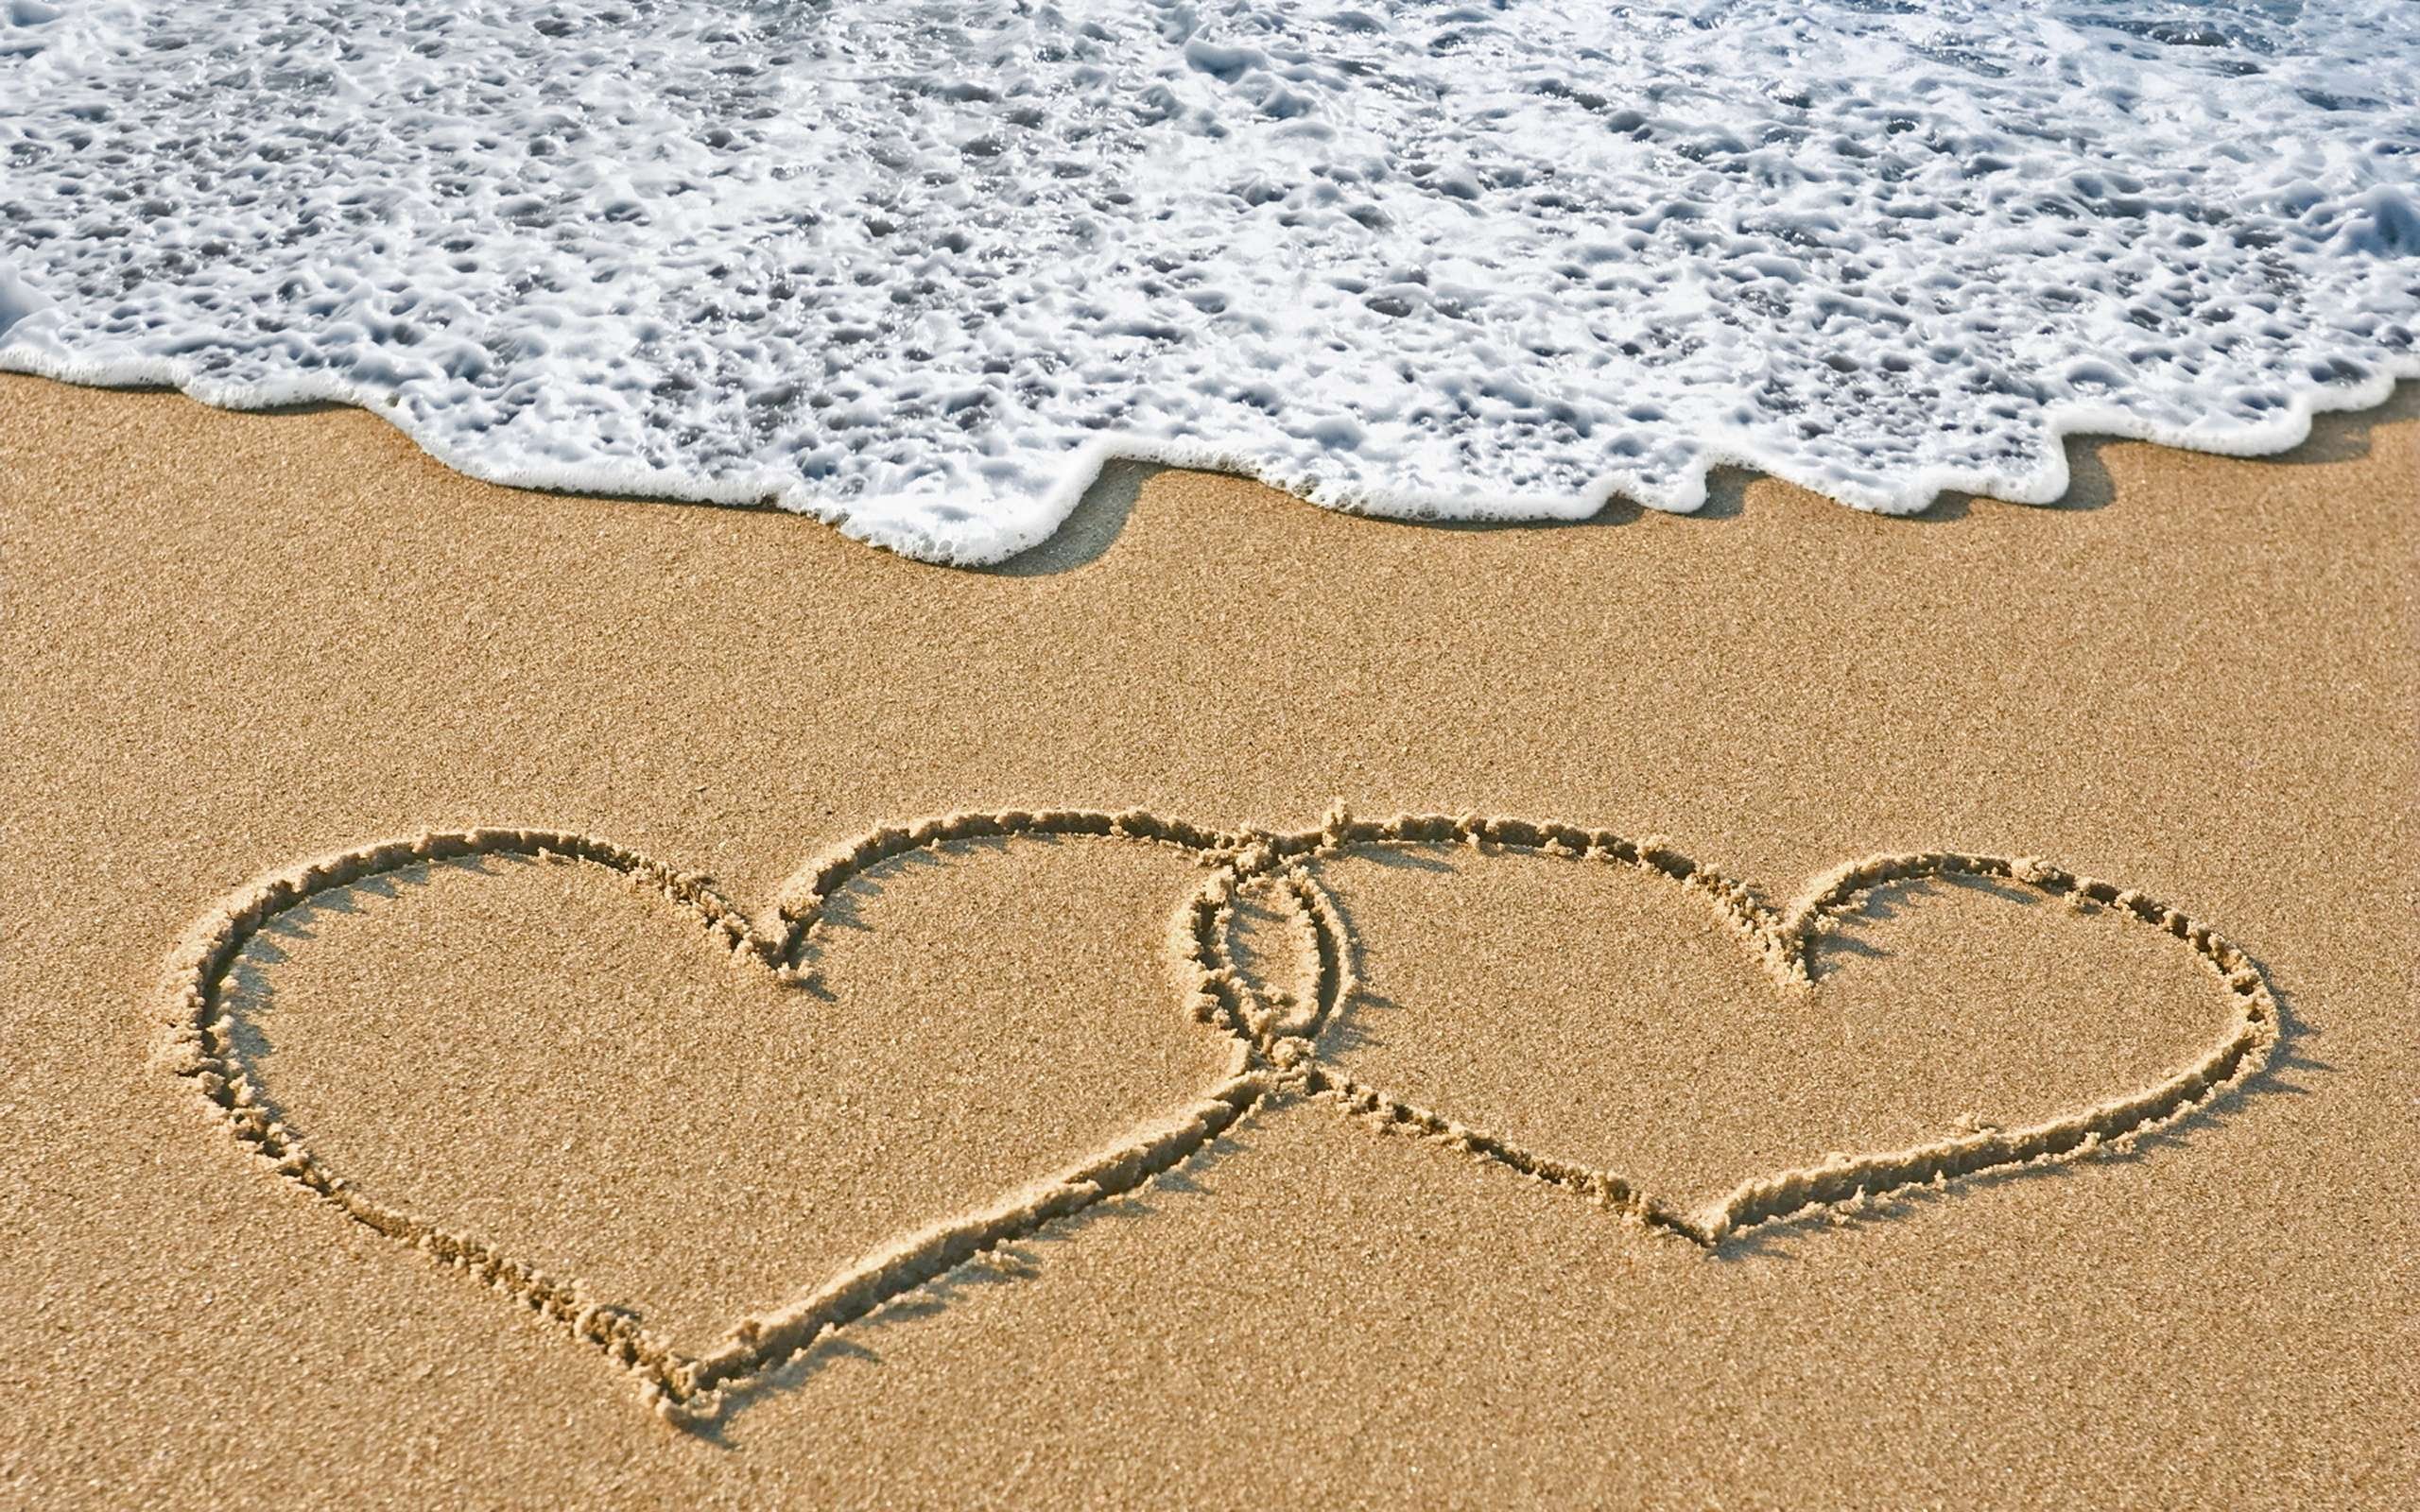 Текст следы на песке. Обои на рабочий стол любовь. Сердце на пляже. Сердечко на песке. Сердечко нарисованное на песке.